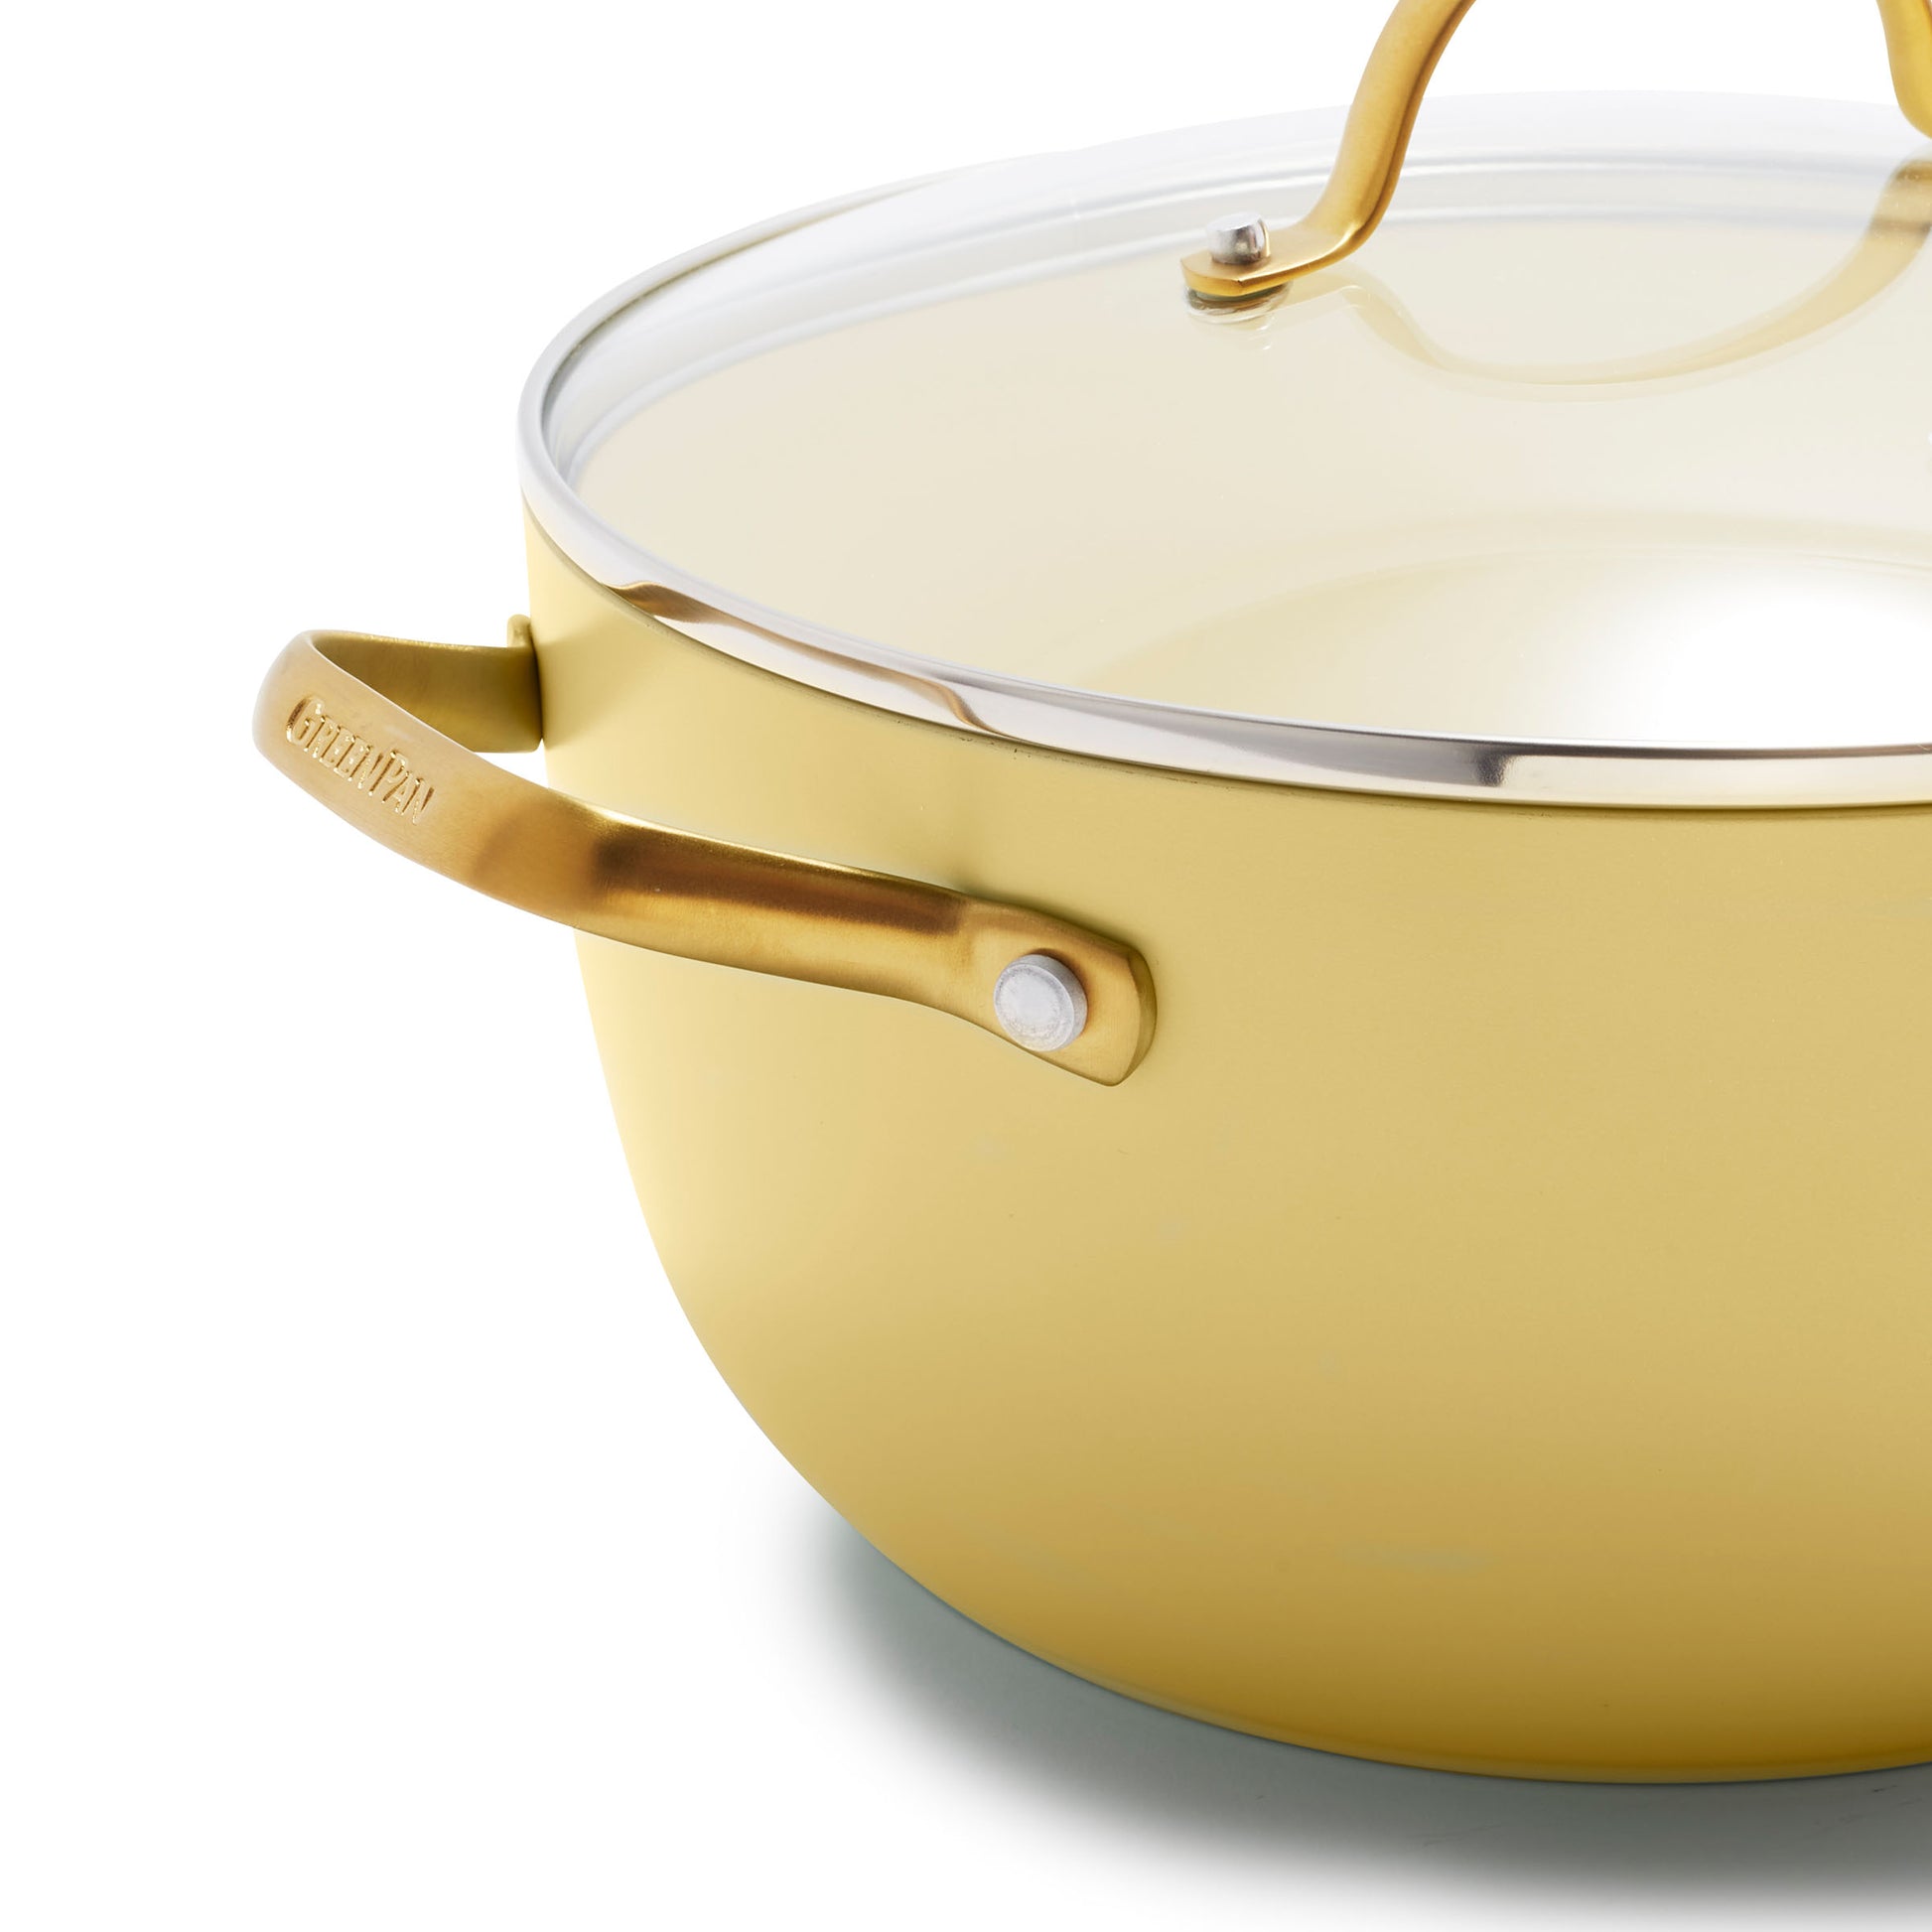  Padova Reserve Sunshine Yellow 10-delige pannenset kookpot gouden handvat